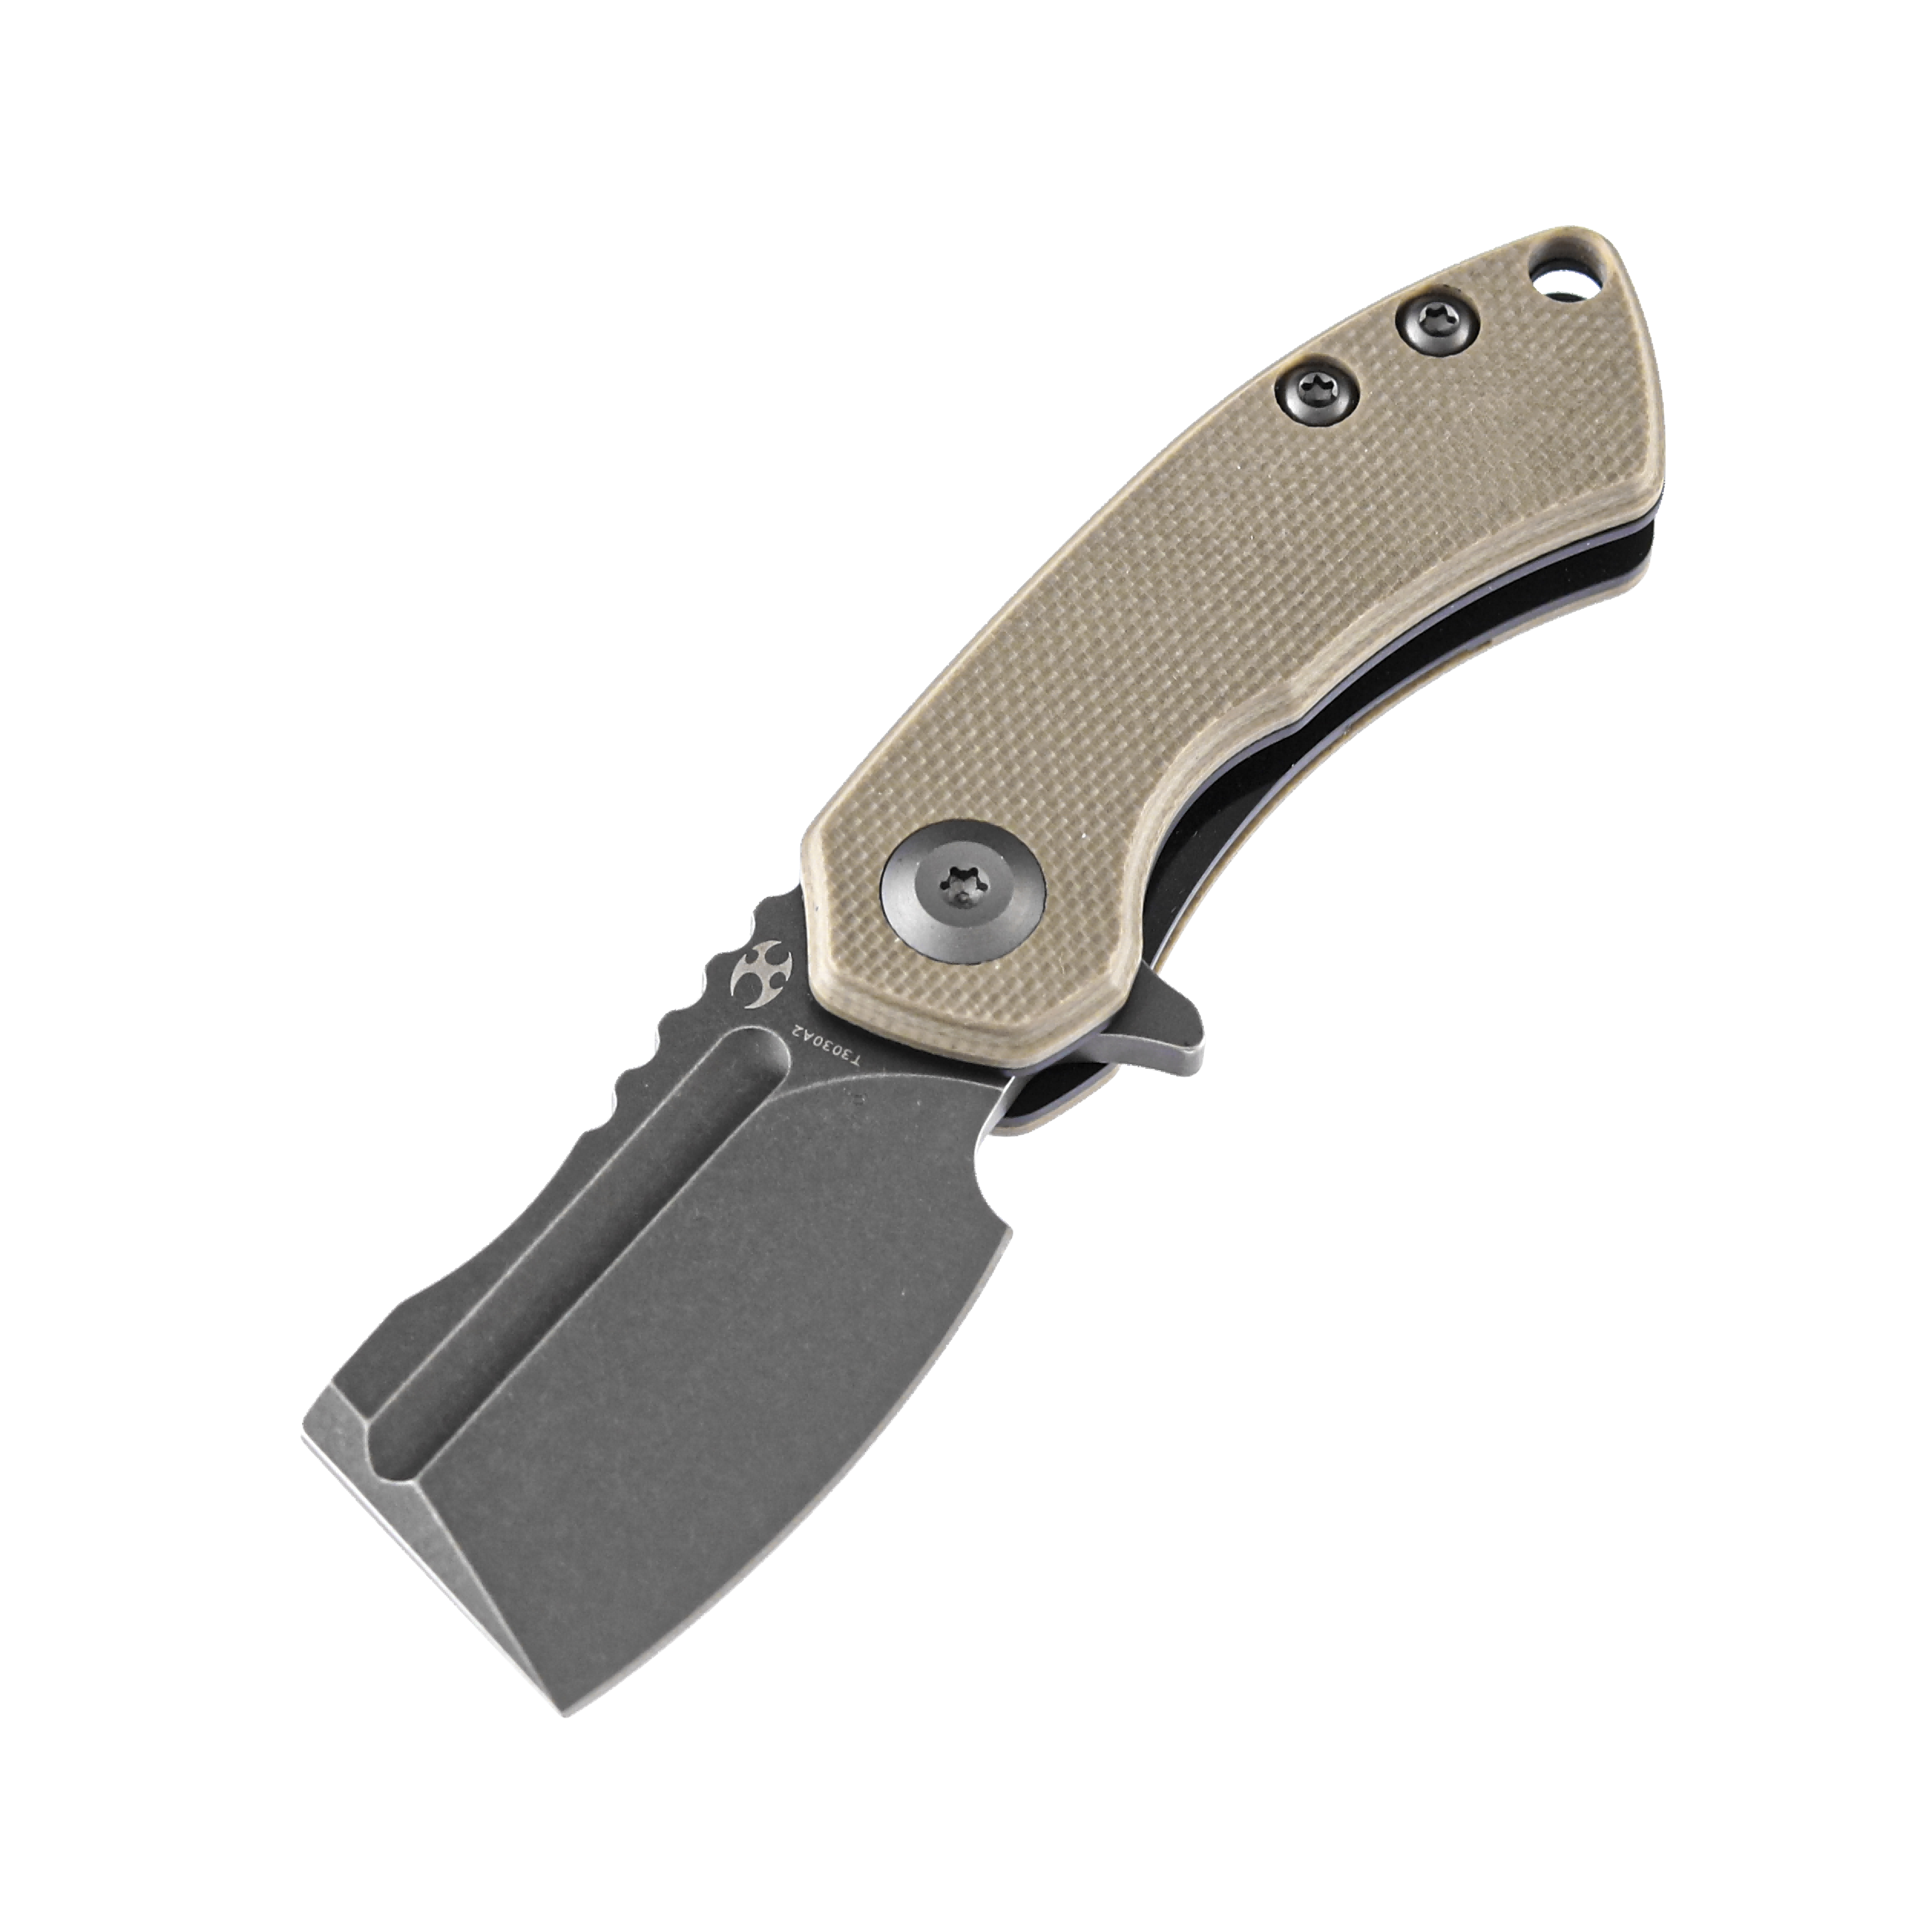 Kansept Knives T3030A2 Mini Korvid 154CM Blade Brown G10 Handle Liner Lock Edc Knives